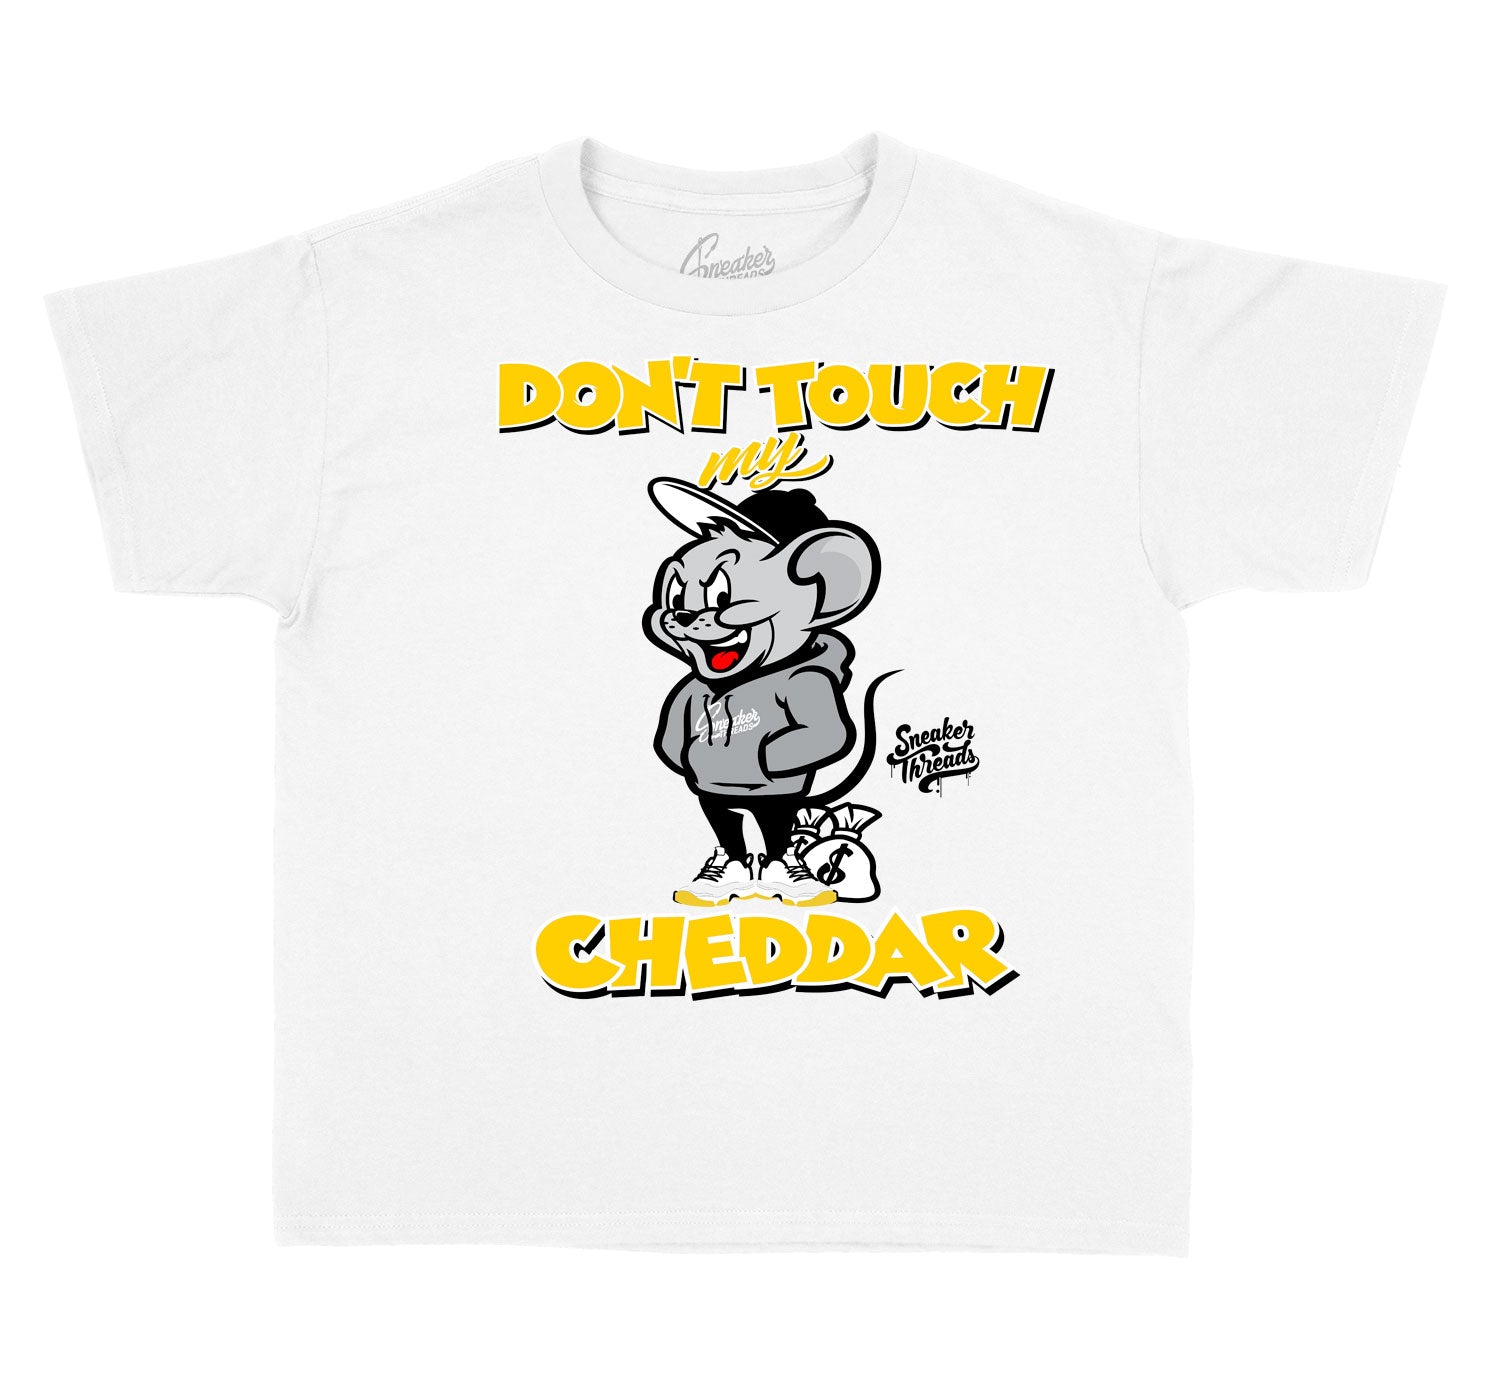 Kids Citrus 11 Shirt - Cheddar - White